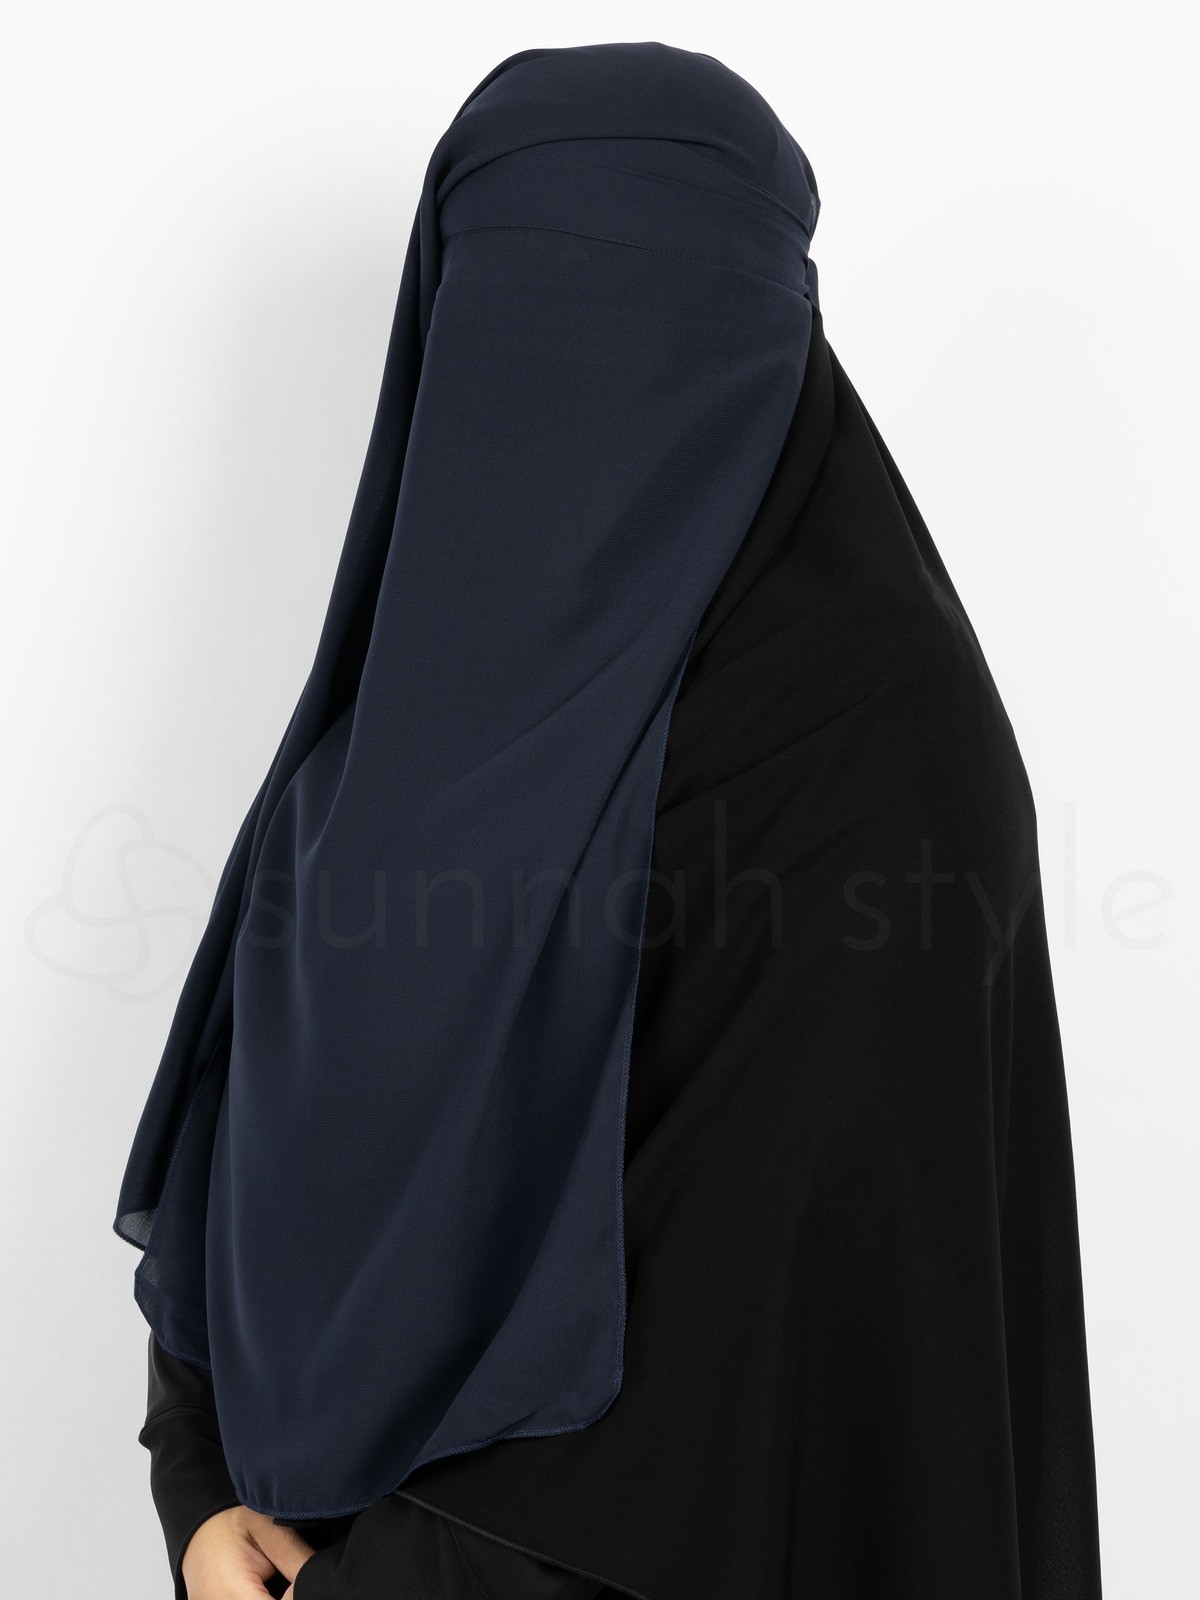 Sunnah Style - Long Three Layer Niqab (Navy Blue)